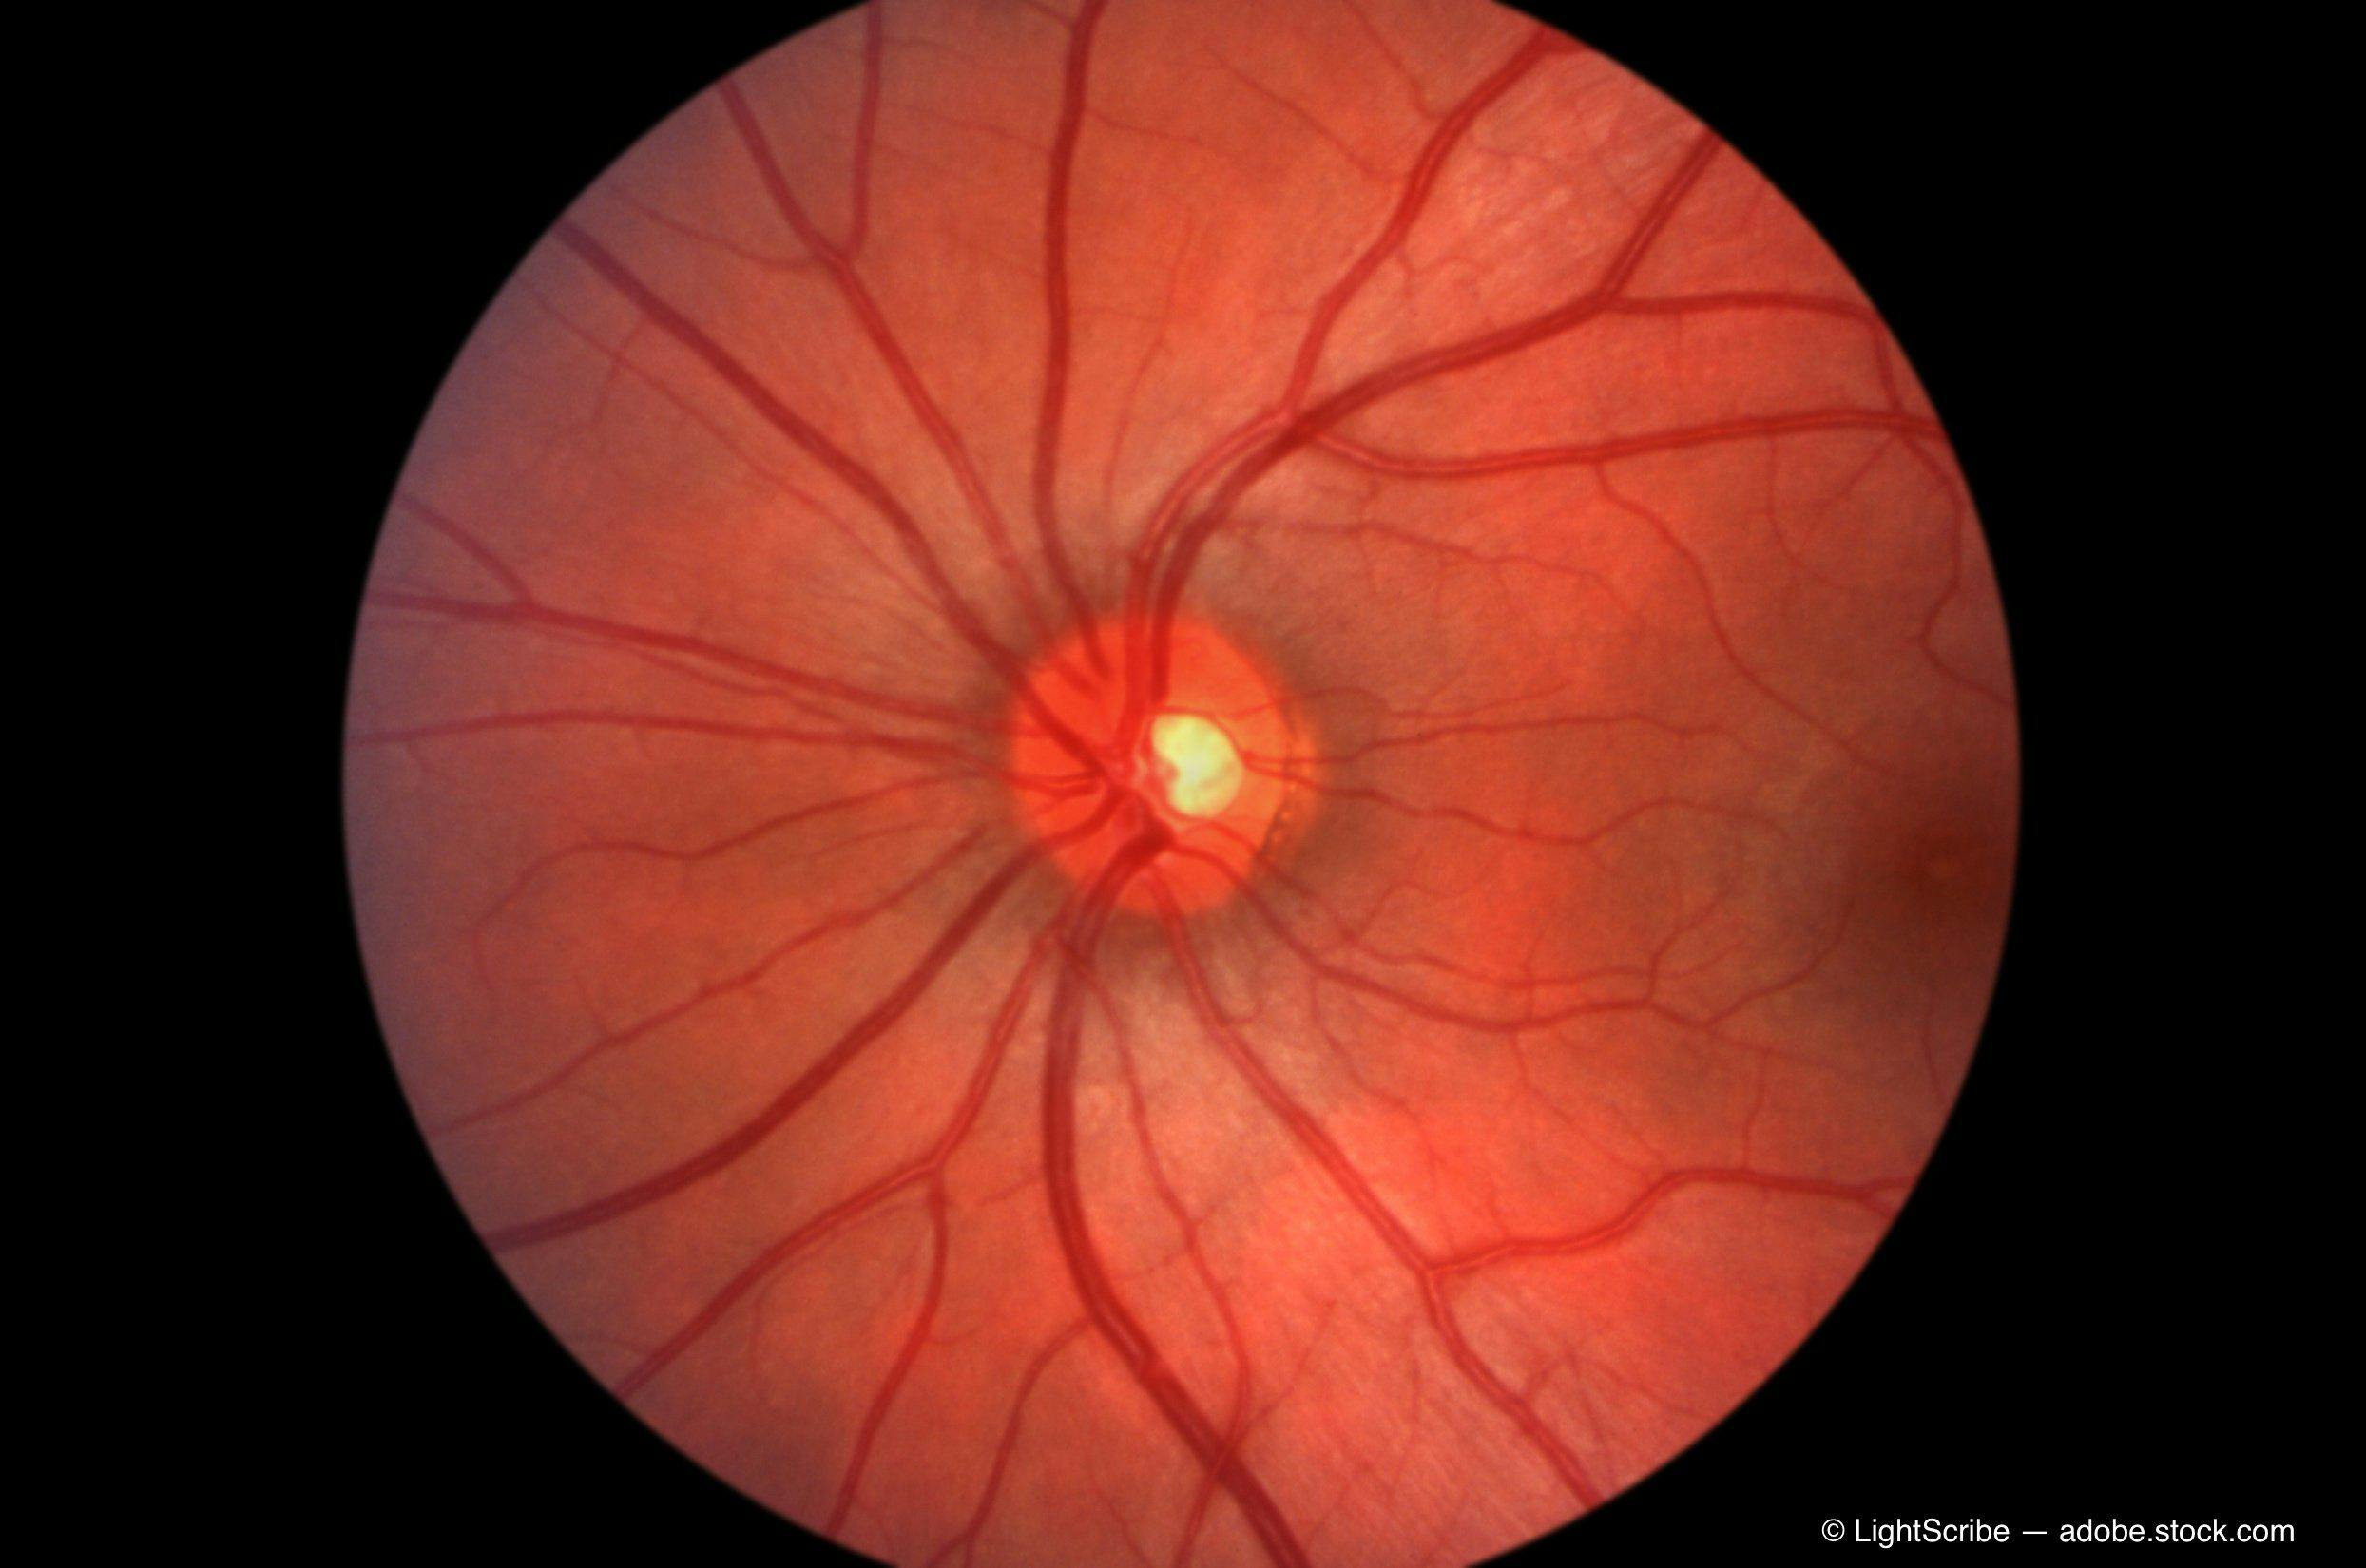 Optic nerve 